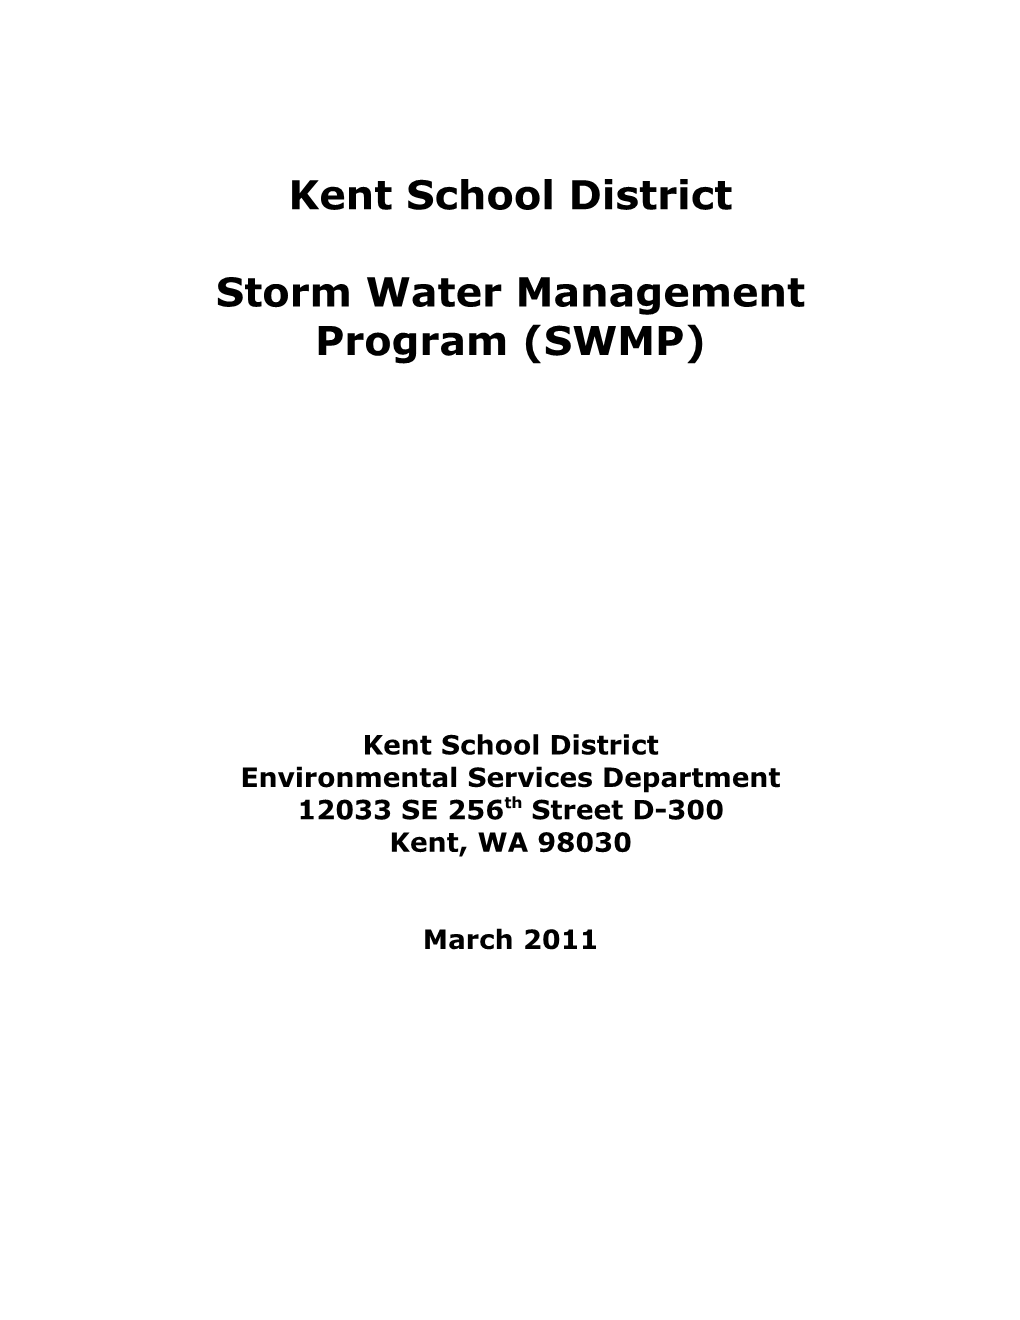 Storm Water Management Program (SWMP)